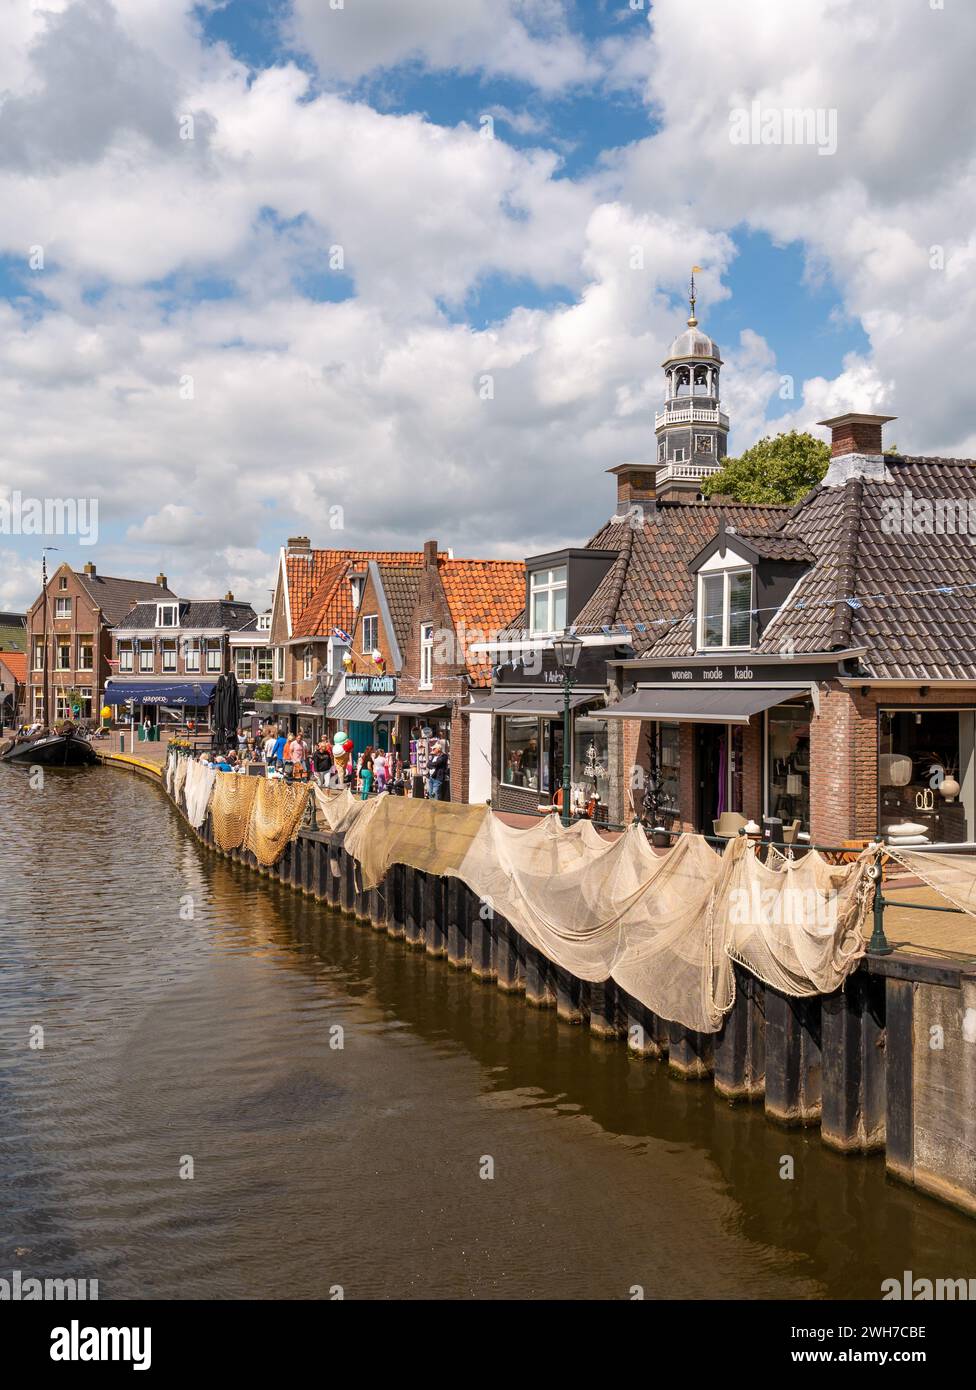 Oudesluis Kai entlang des Het Dok Kanals mit Geschäften in alten Gebäuden, Lemmer, Friesland, Niederlande Stockfoto